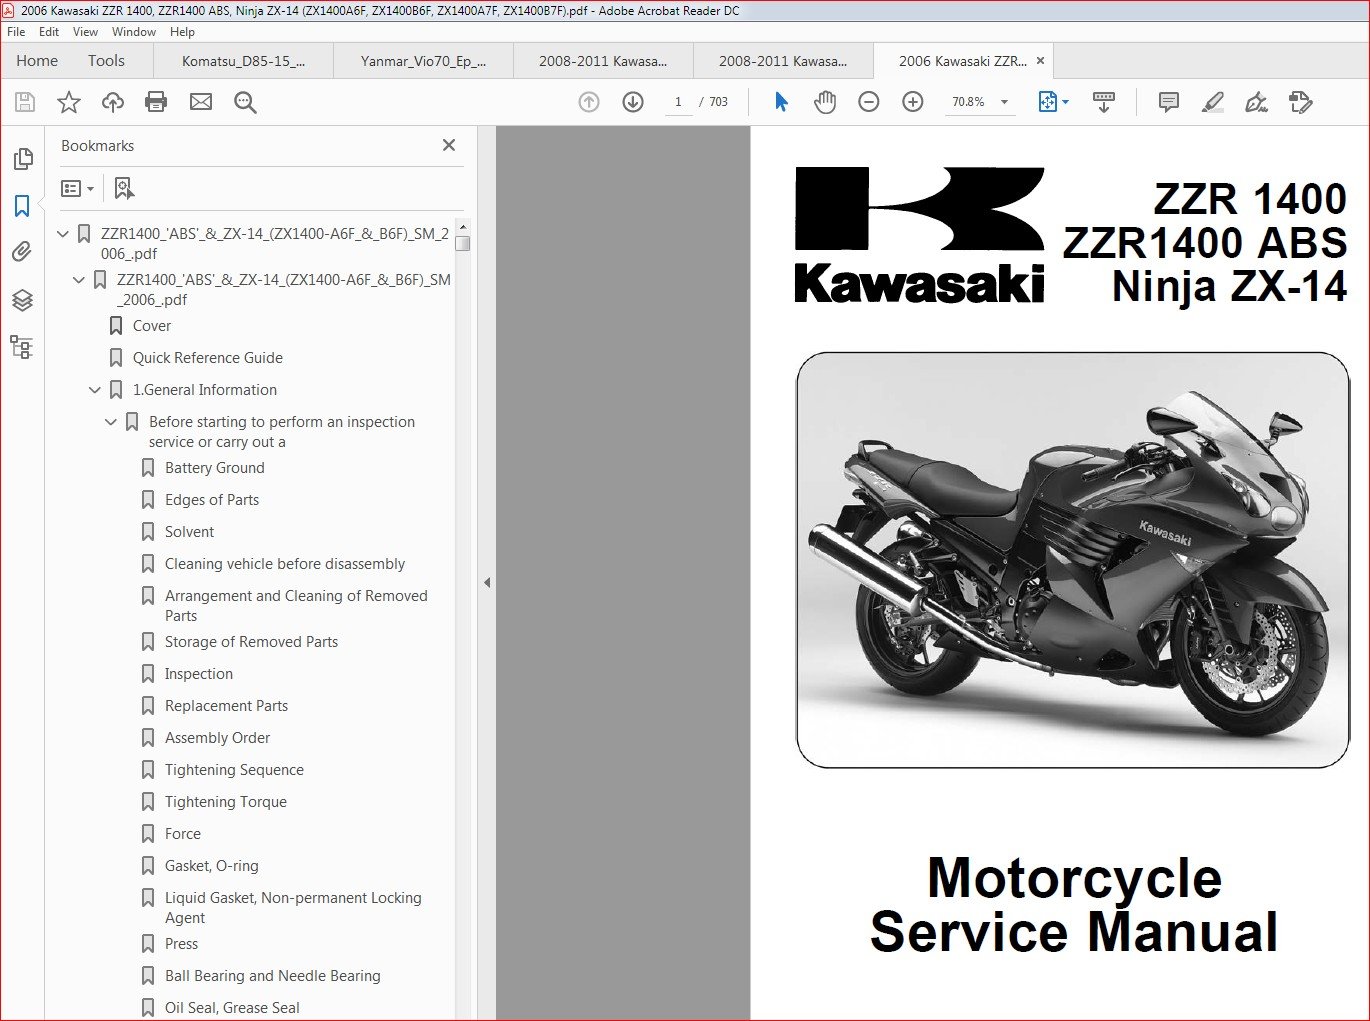 Se insekter dybtgående Miljøvenlig 2006 Kawasaki Zzr1400 Zzr1400 Abs Ninja Zx 14 Motorcycle Workshop Repair Service  Manual DOWNLOAD - HeyDownloads - Manual Downloads